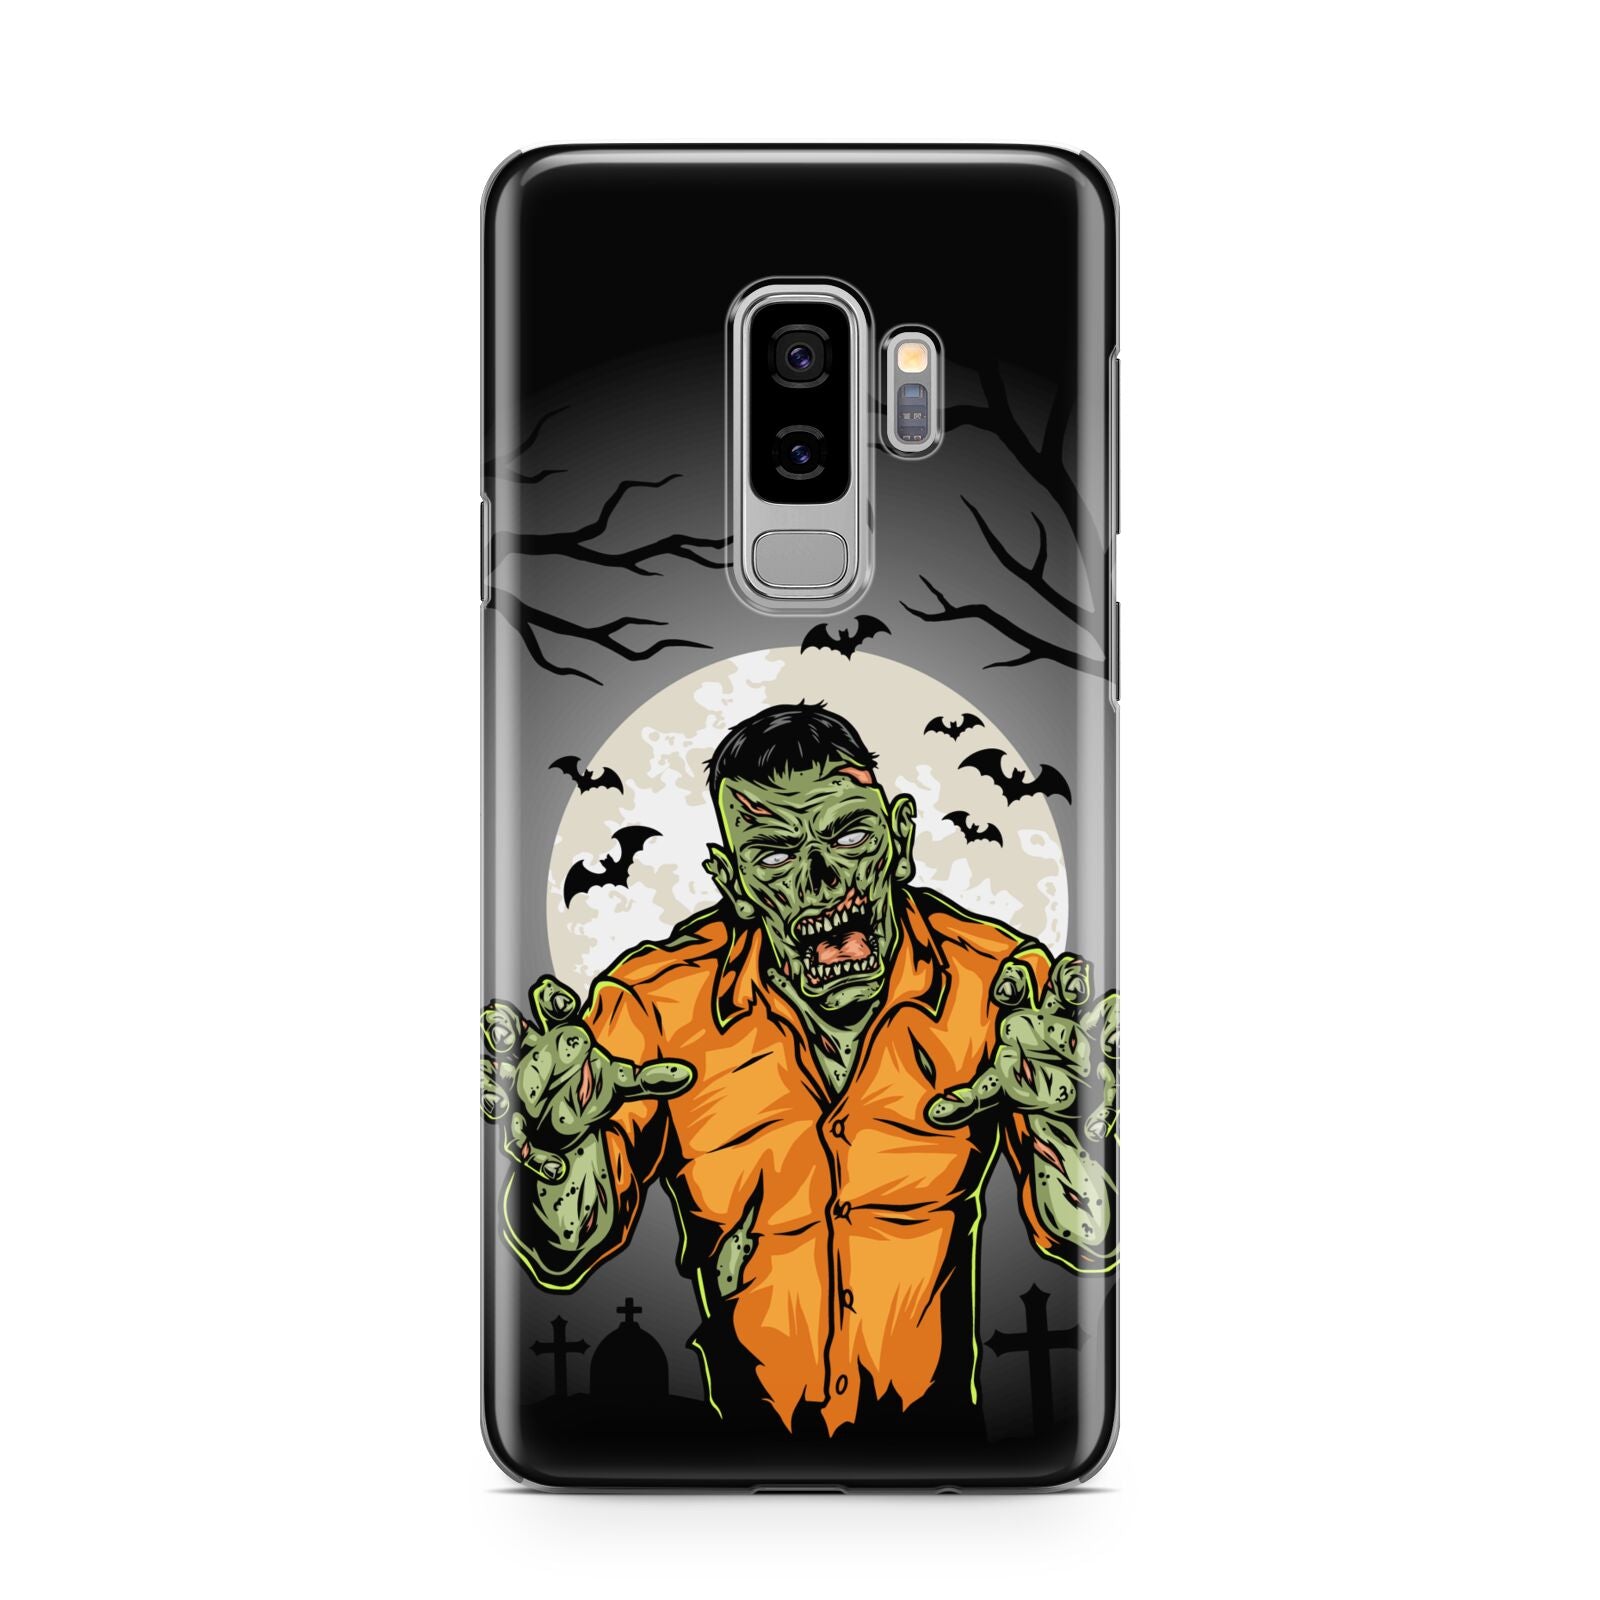 Zombie Night Samsung Galaxy S9 Plus Case on Silver phone